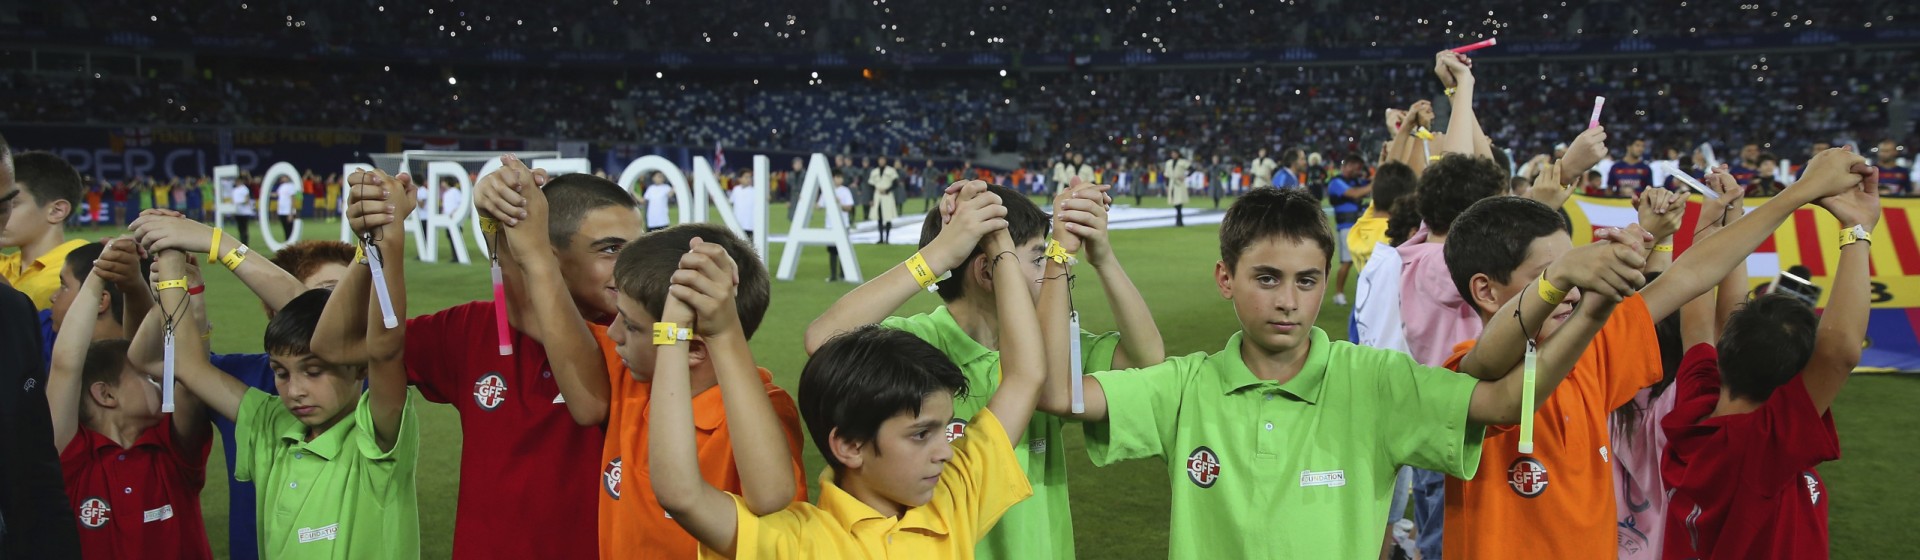 UEFA Foundation for Children